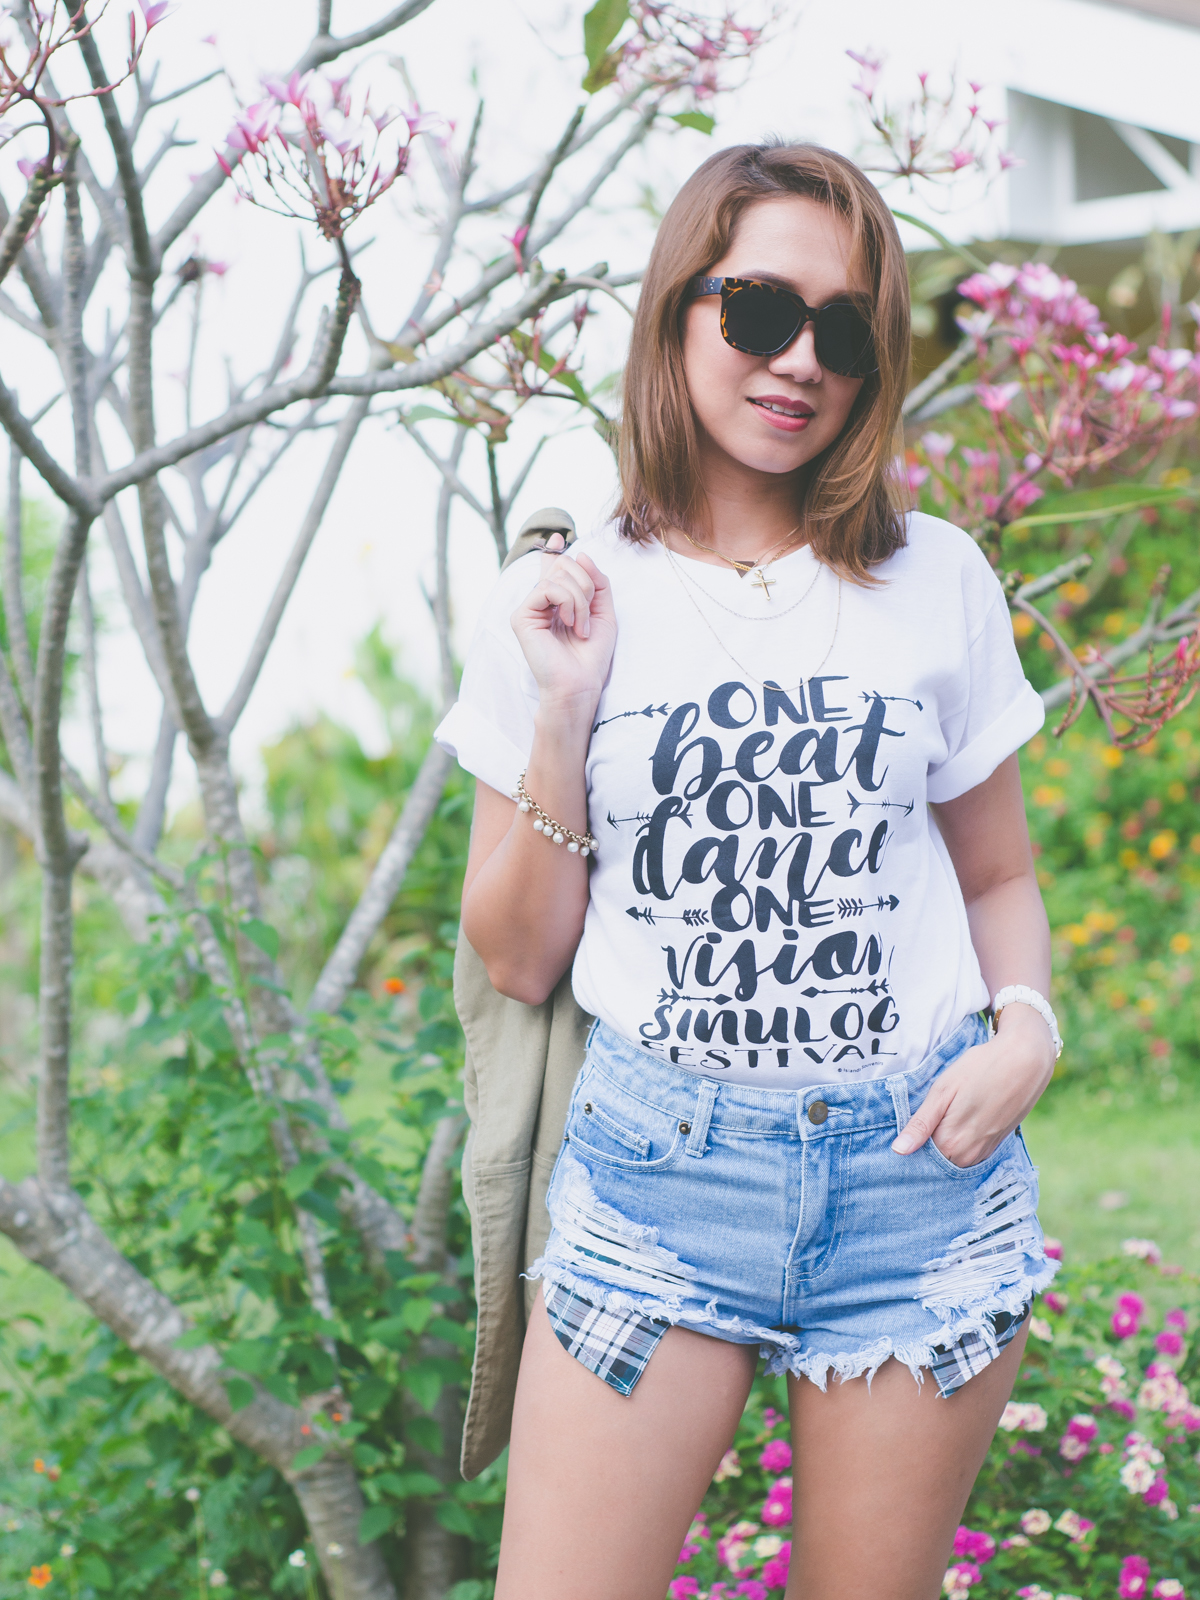 Cebu Fashion Blogger, Sinulog, Sinulog 2016, Sinulog Outfit, OUTFIT OF THE DAY, Mom and Daughter, Cebu Bloggers, Cebu Events, Mommy and Daughter style, Mommy blogger, Cebu lifestyle blog, 